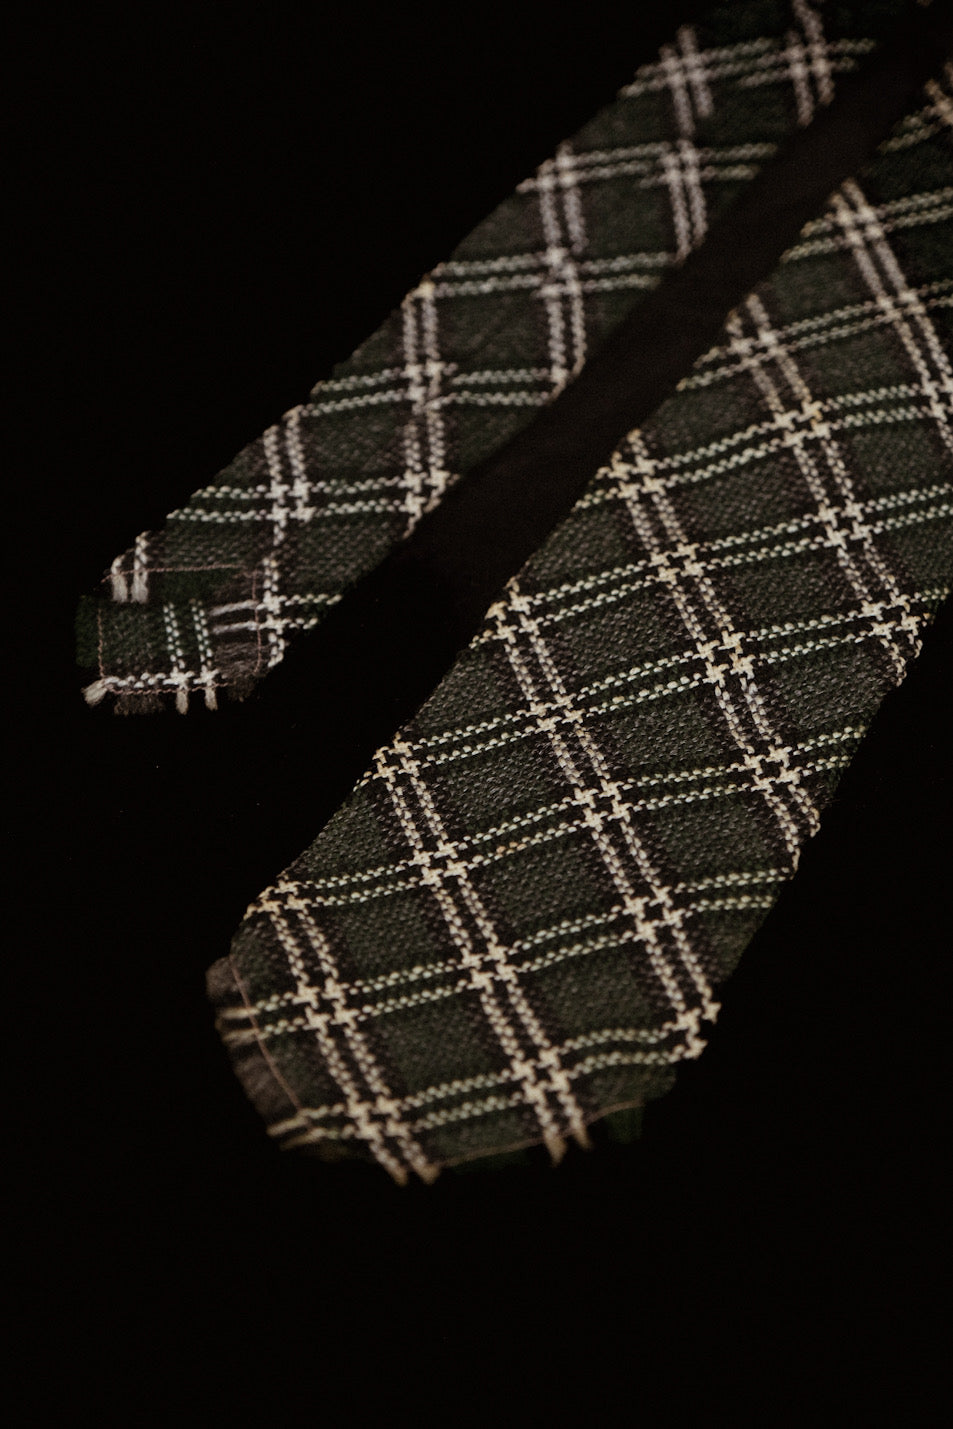 Green & White Checkerboard Native American Tie By Mesa Verde Co.